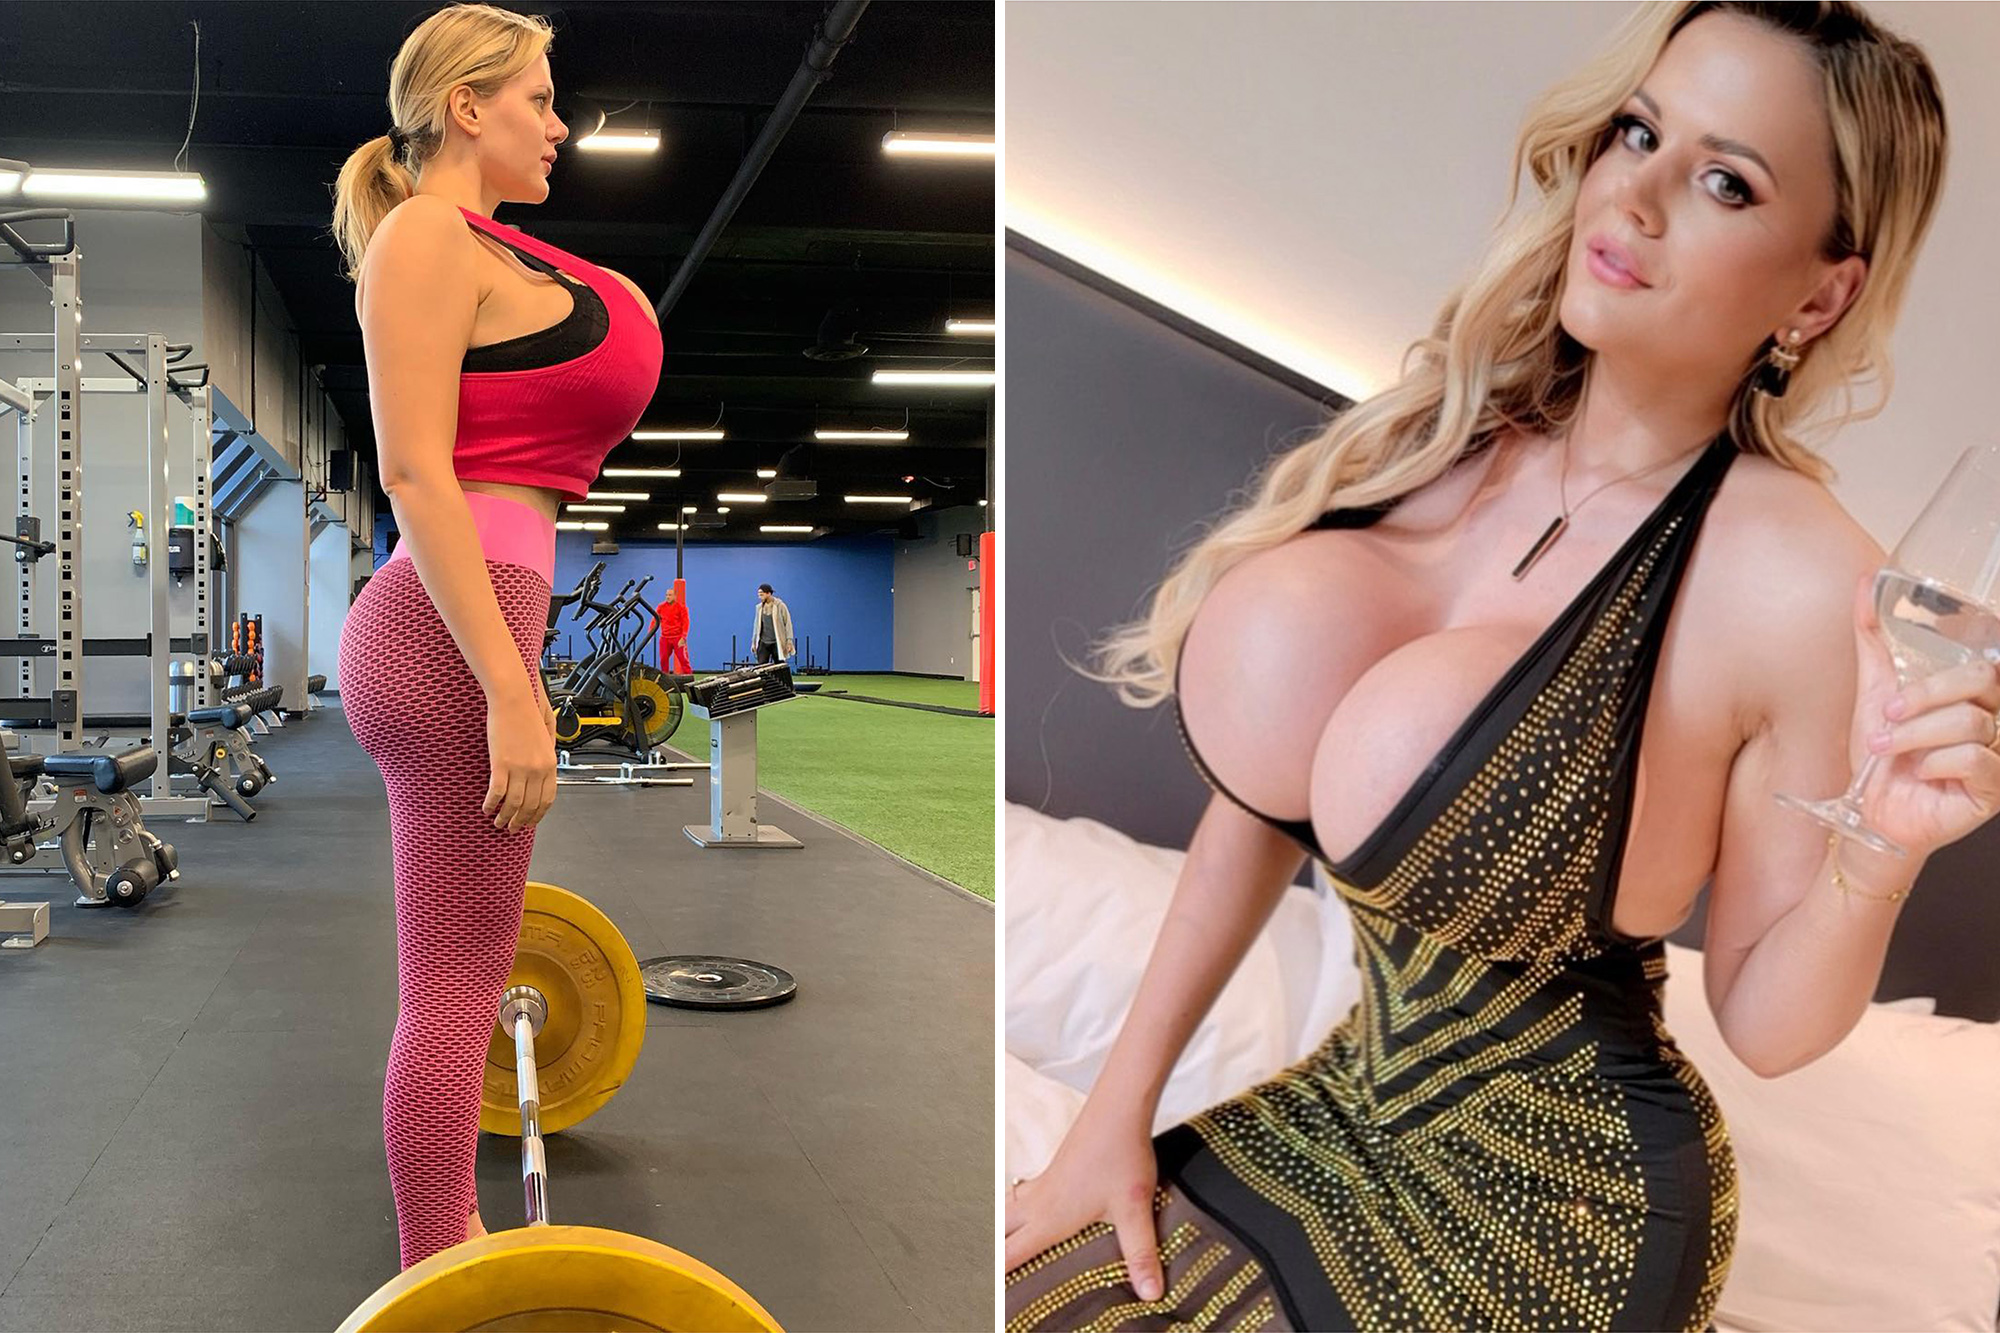 christina ponte share big huge natural boobs photos